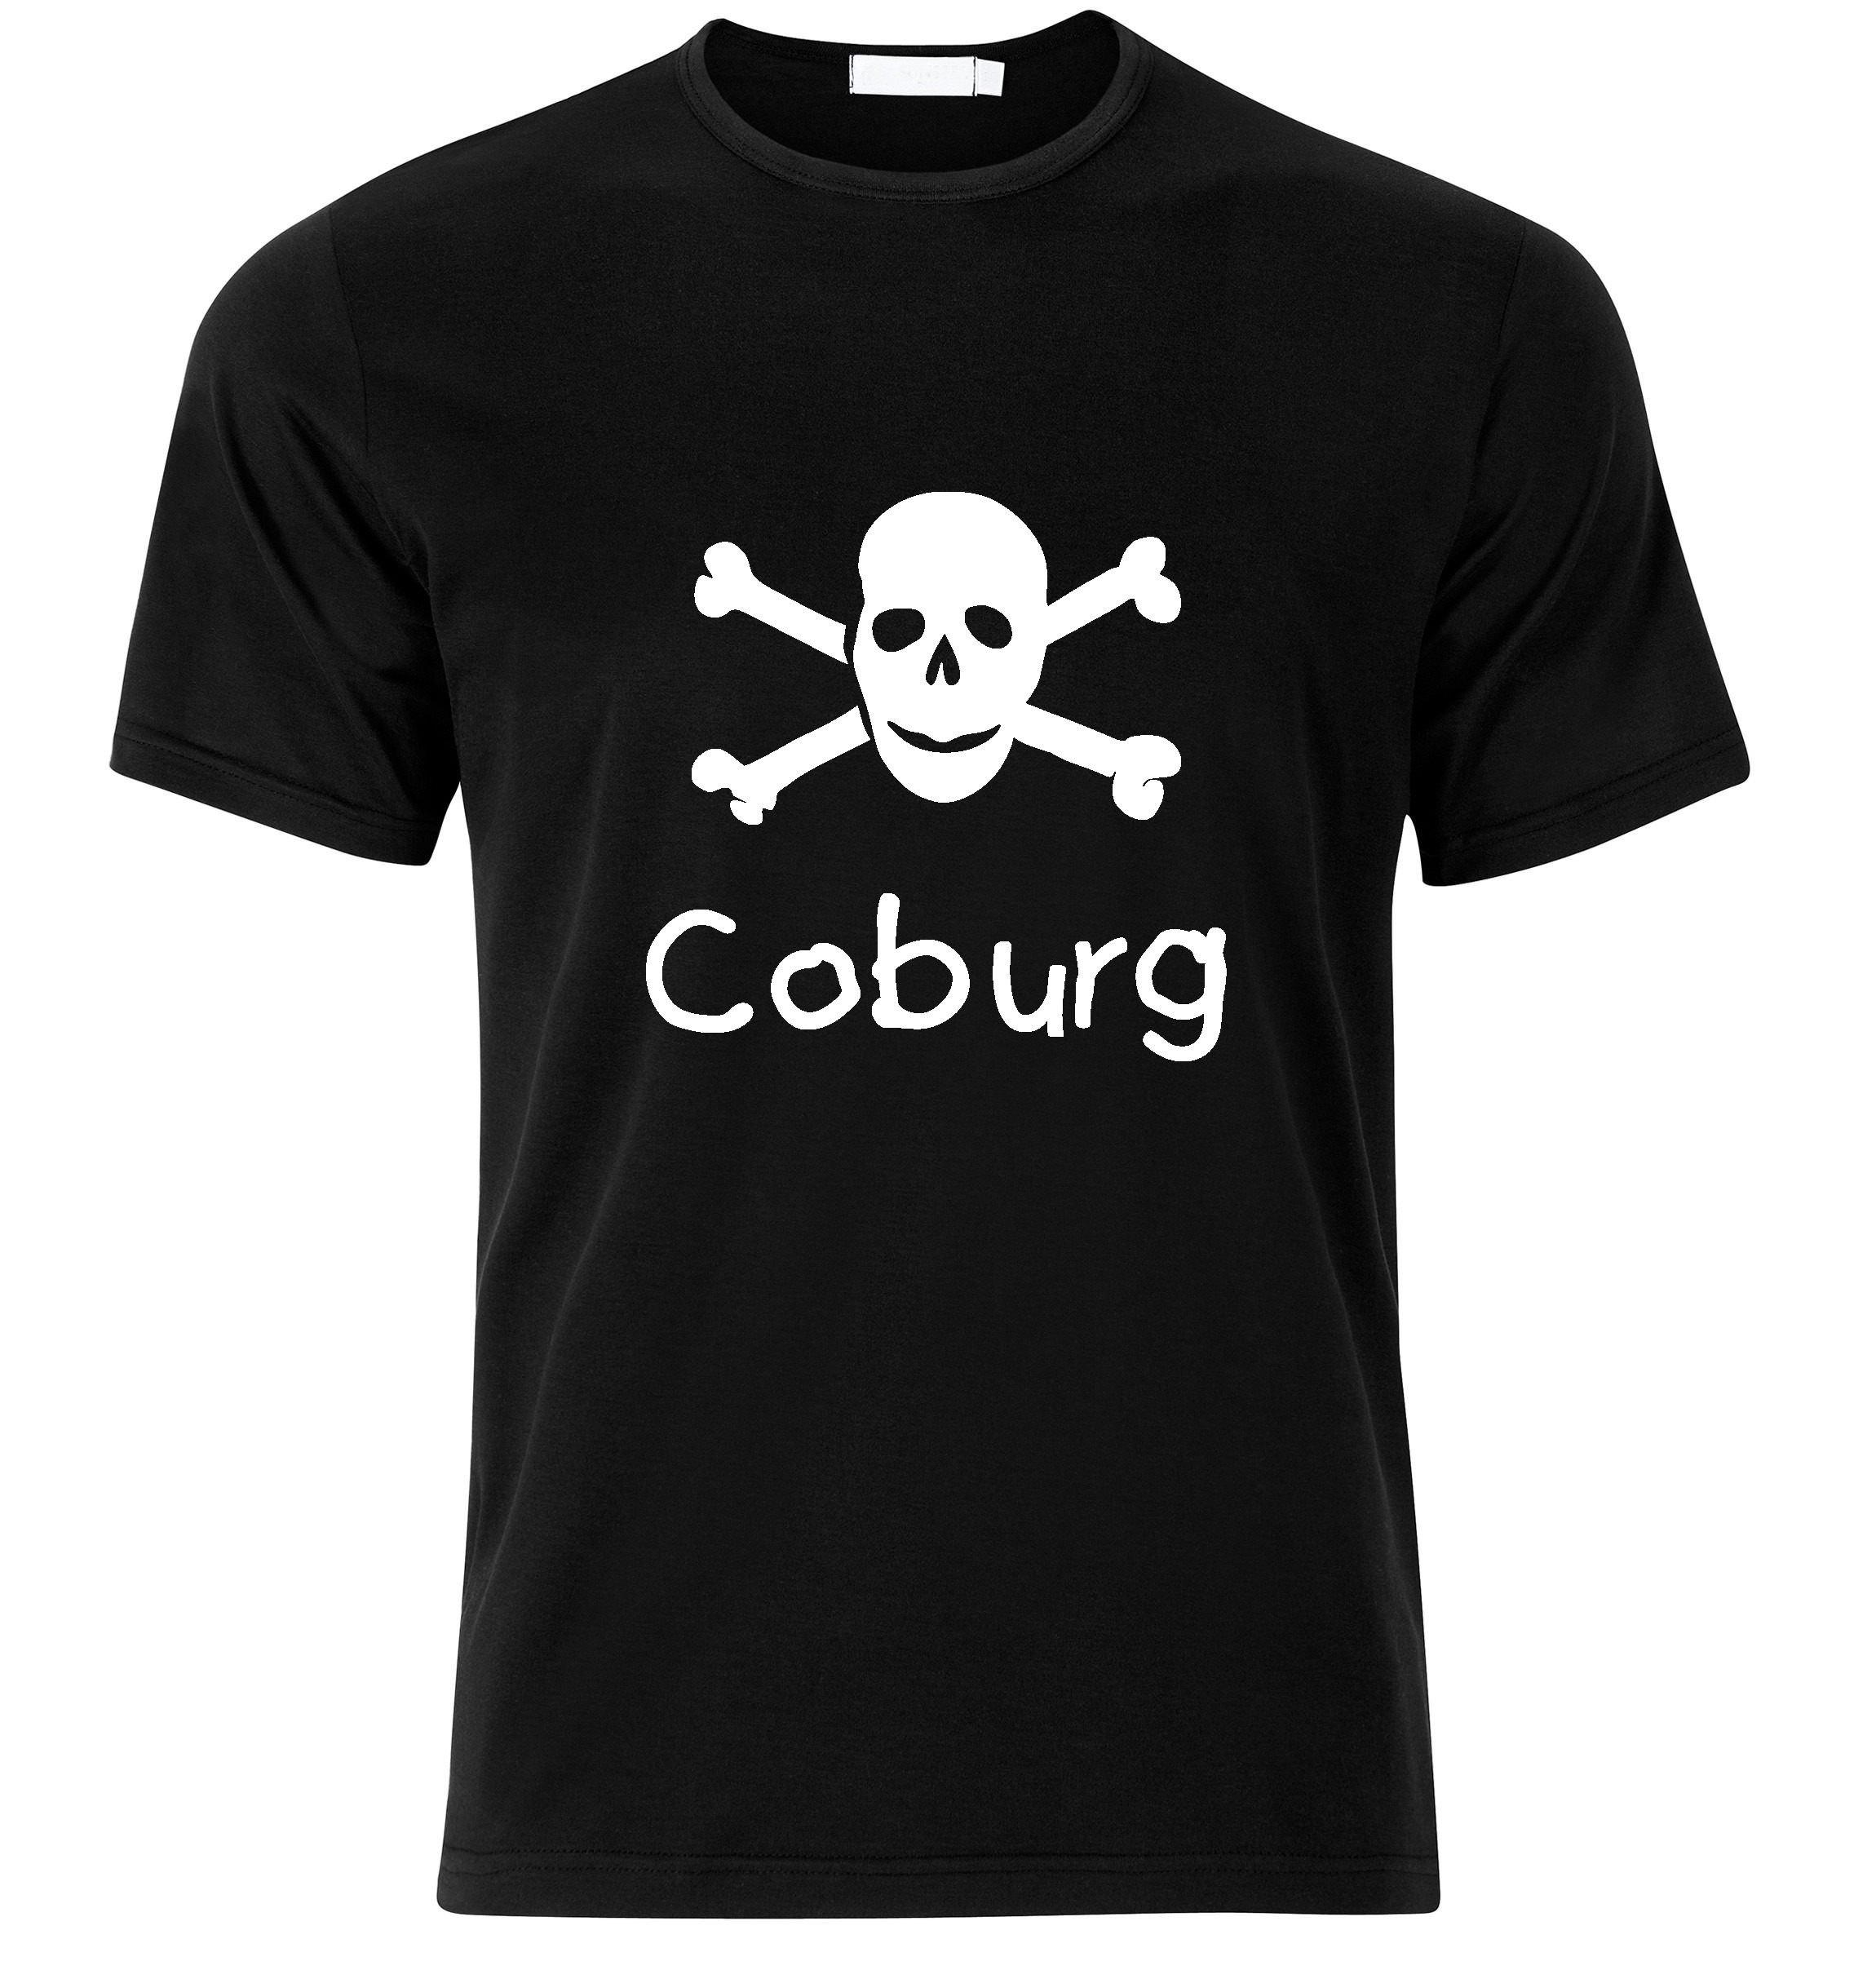 T-Shirt Coburg Jolly Roger, Totenkopf